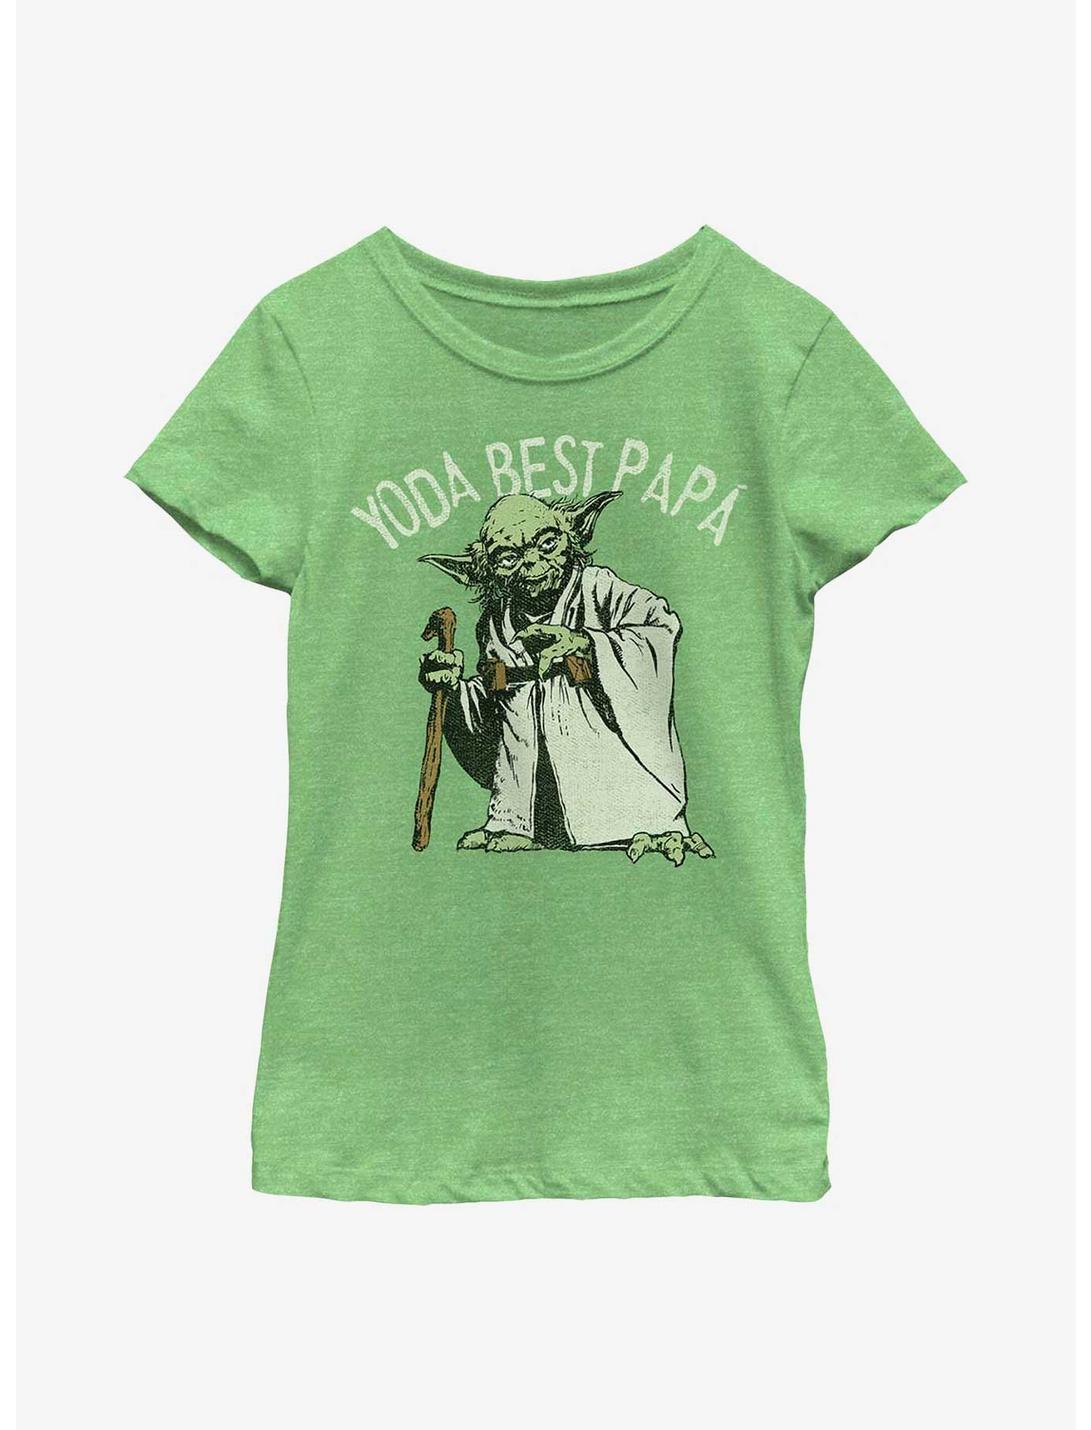 Star Wars Yoda Best Papa Youth Girls T-Shirt, GRN APPLE, hi-res